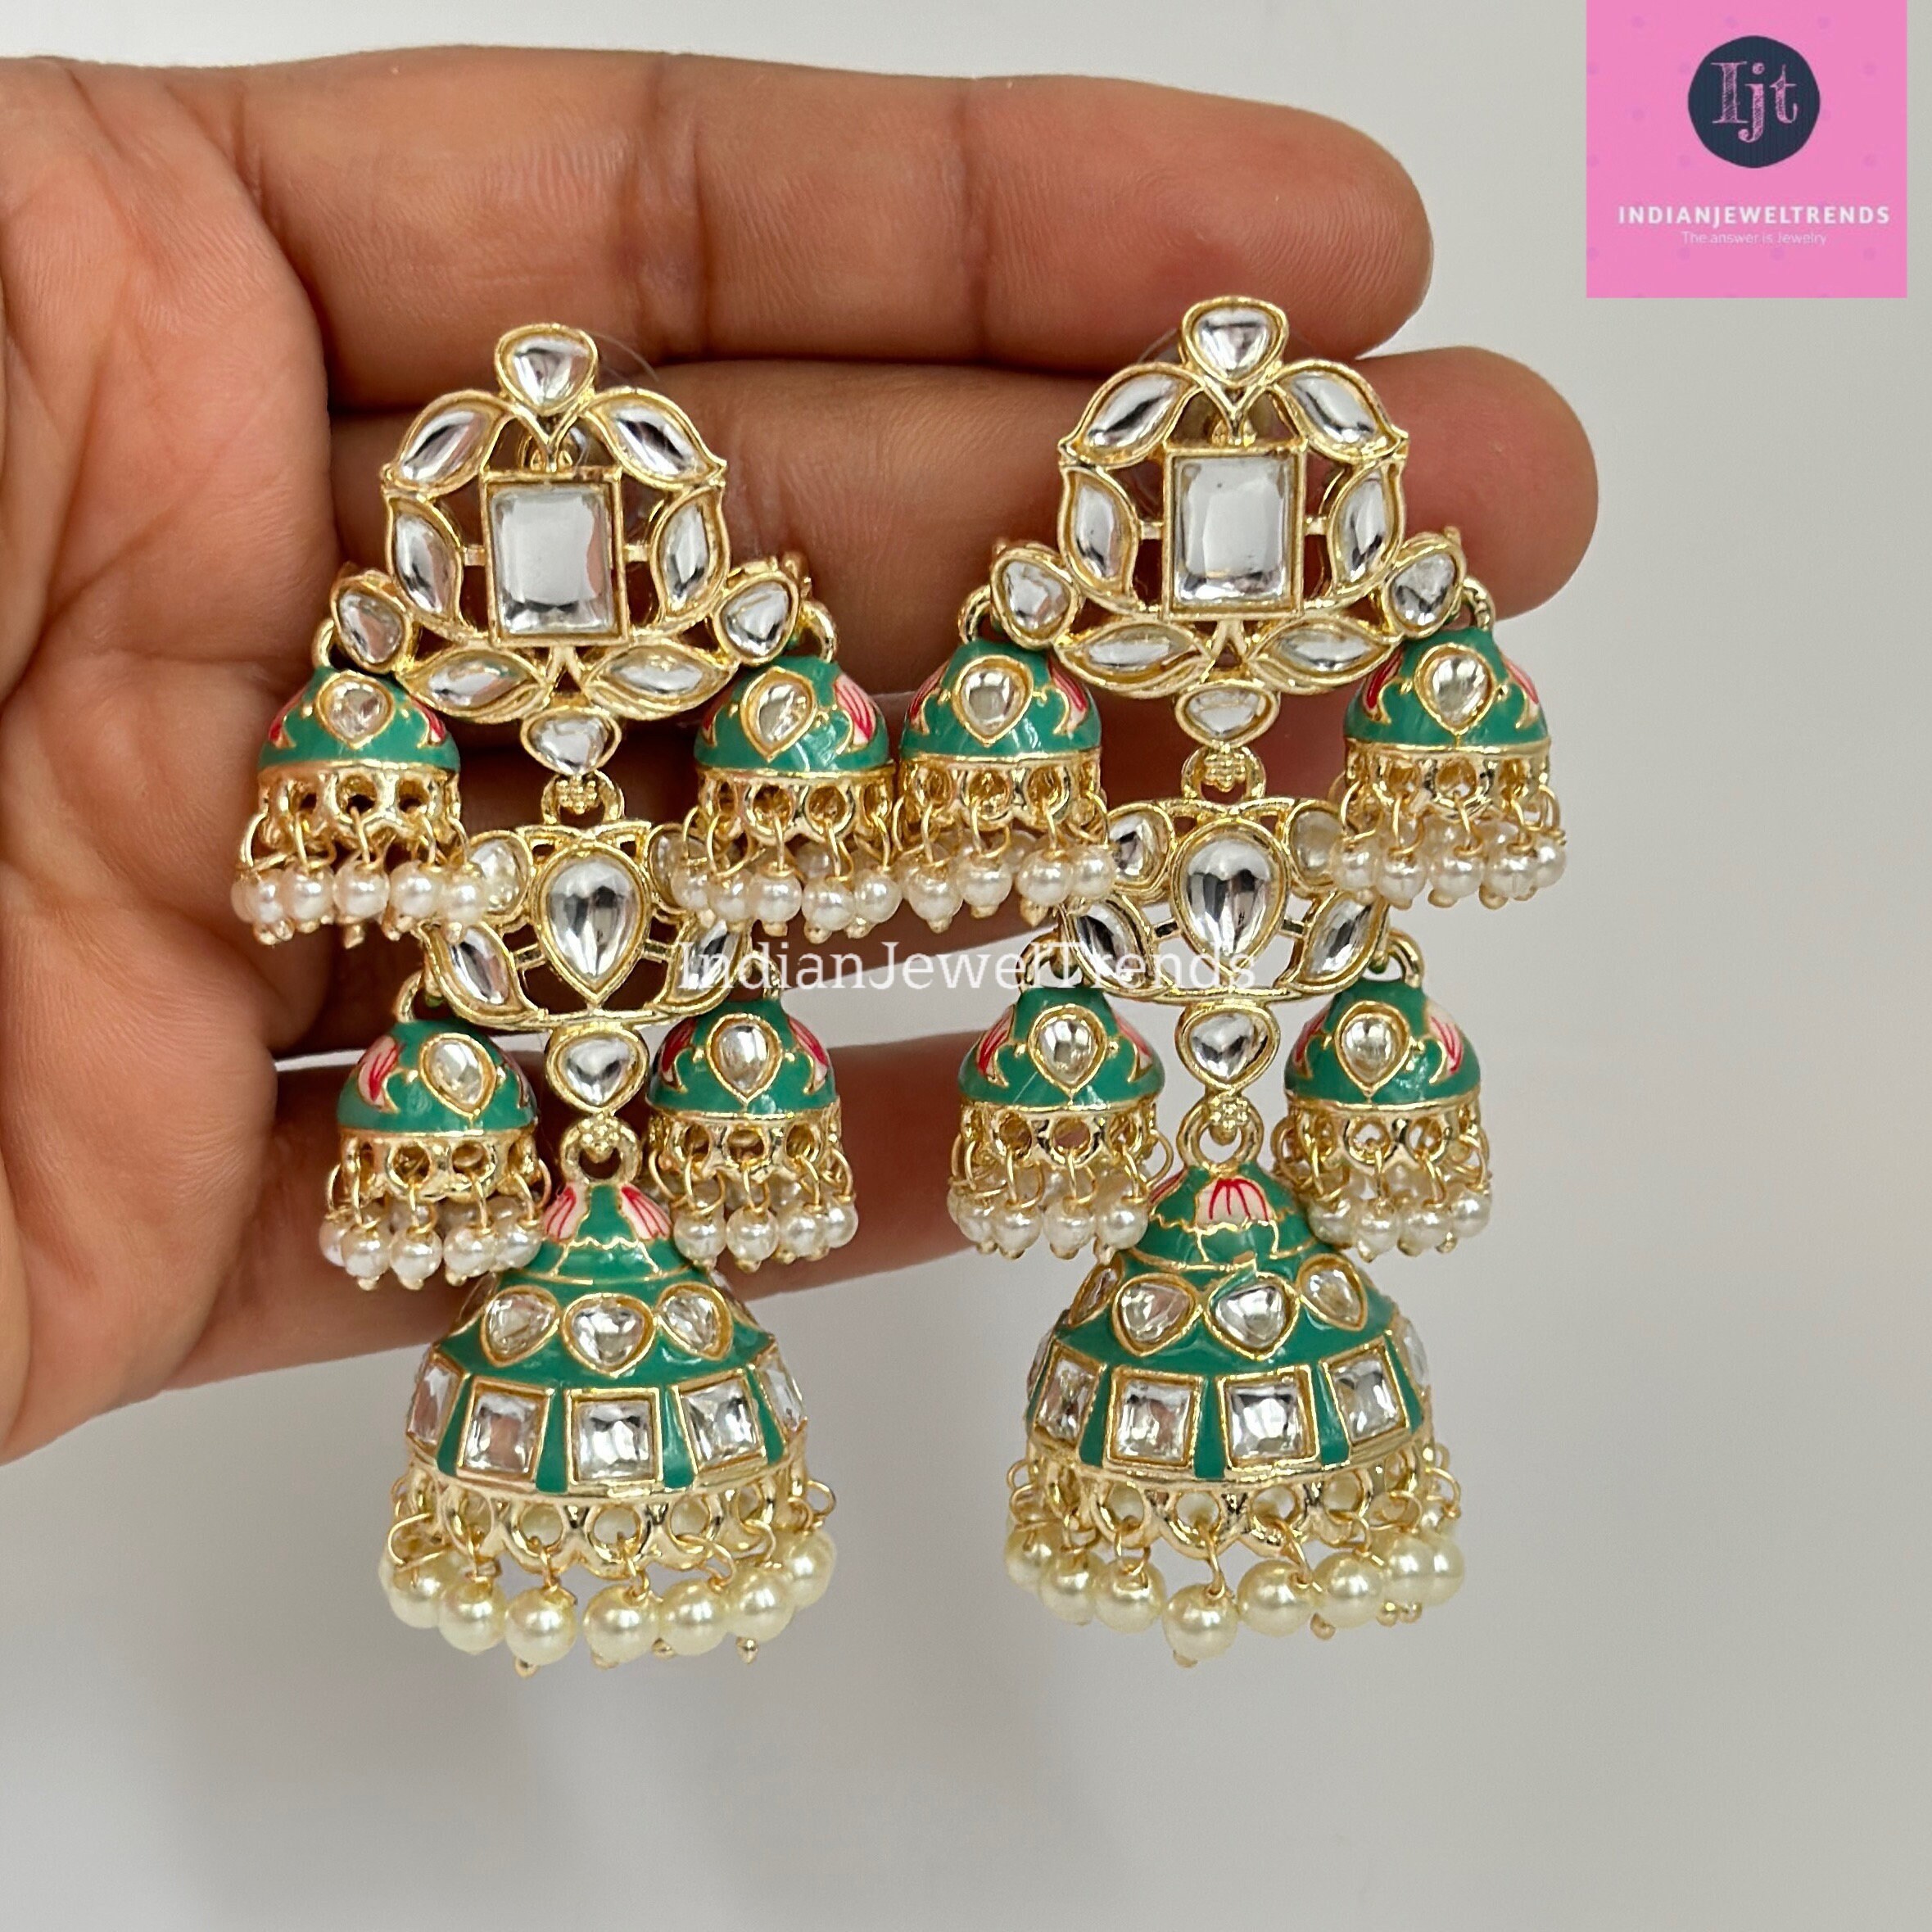 Amrapali Jewelry in Bahubali - YouTube